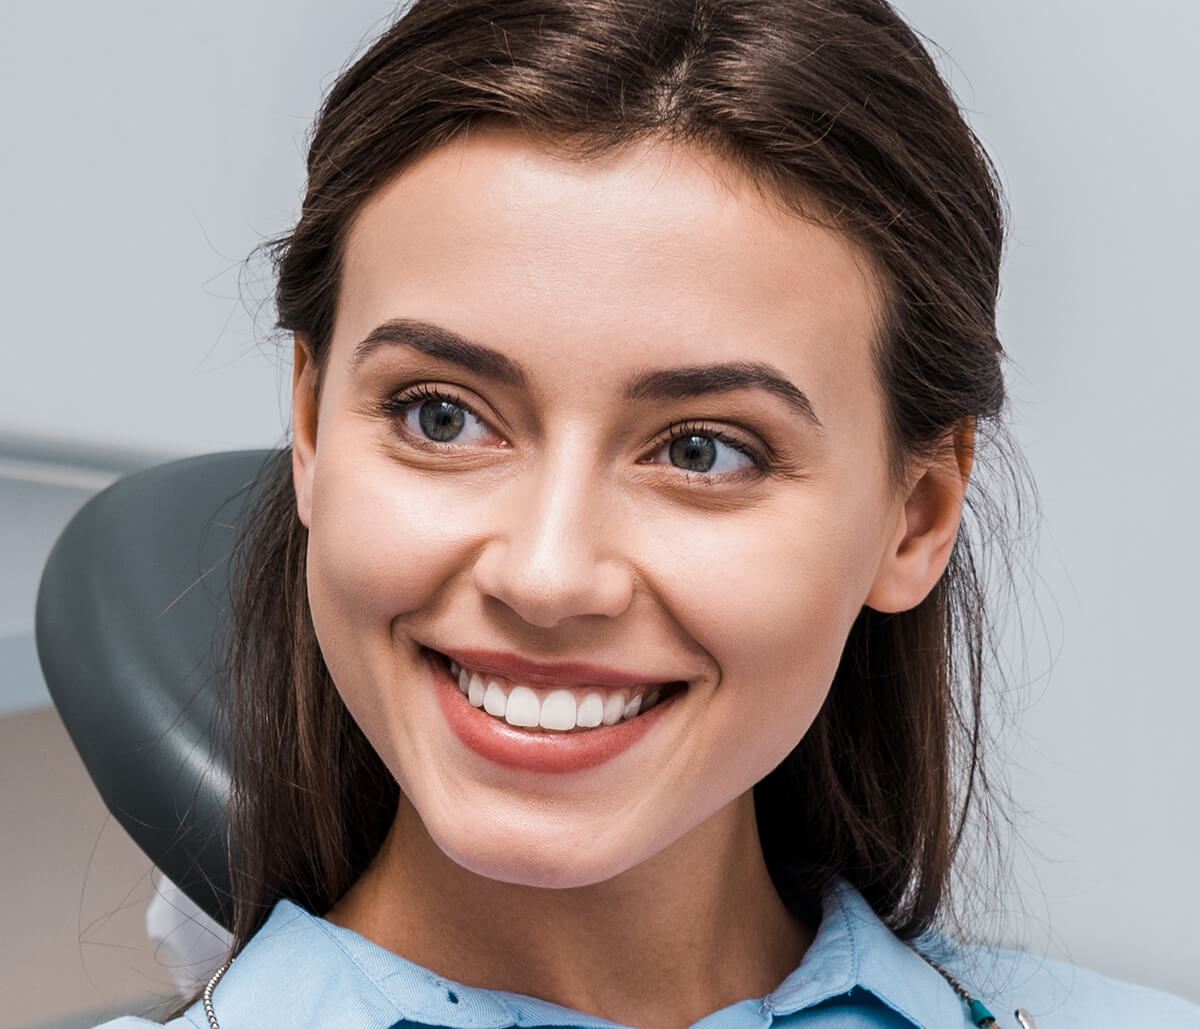 Teeth Implants in Turlock CA Area